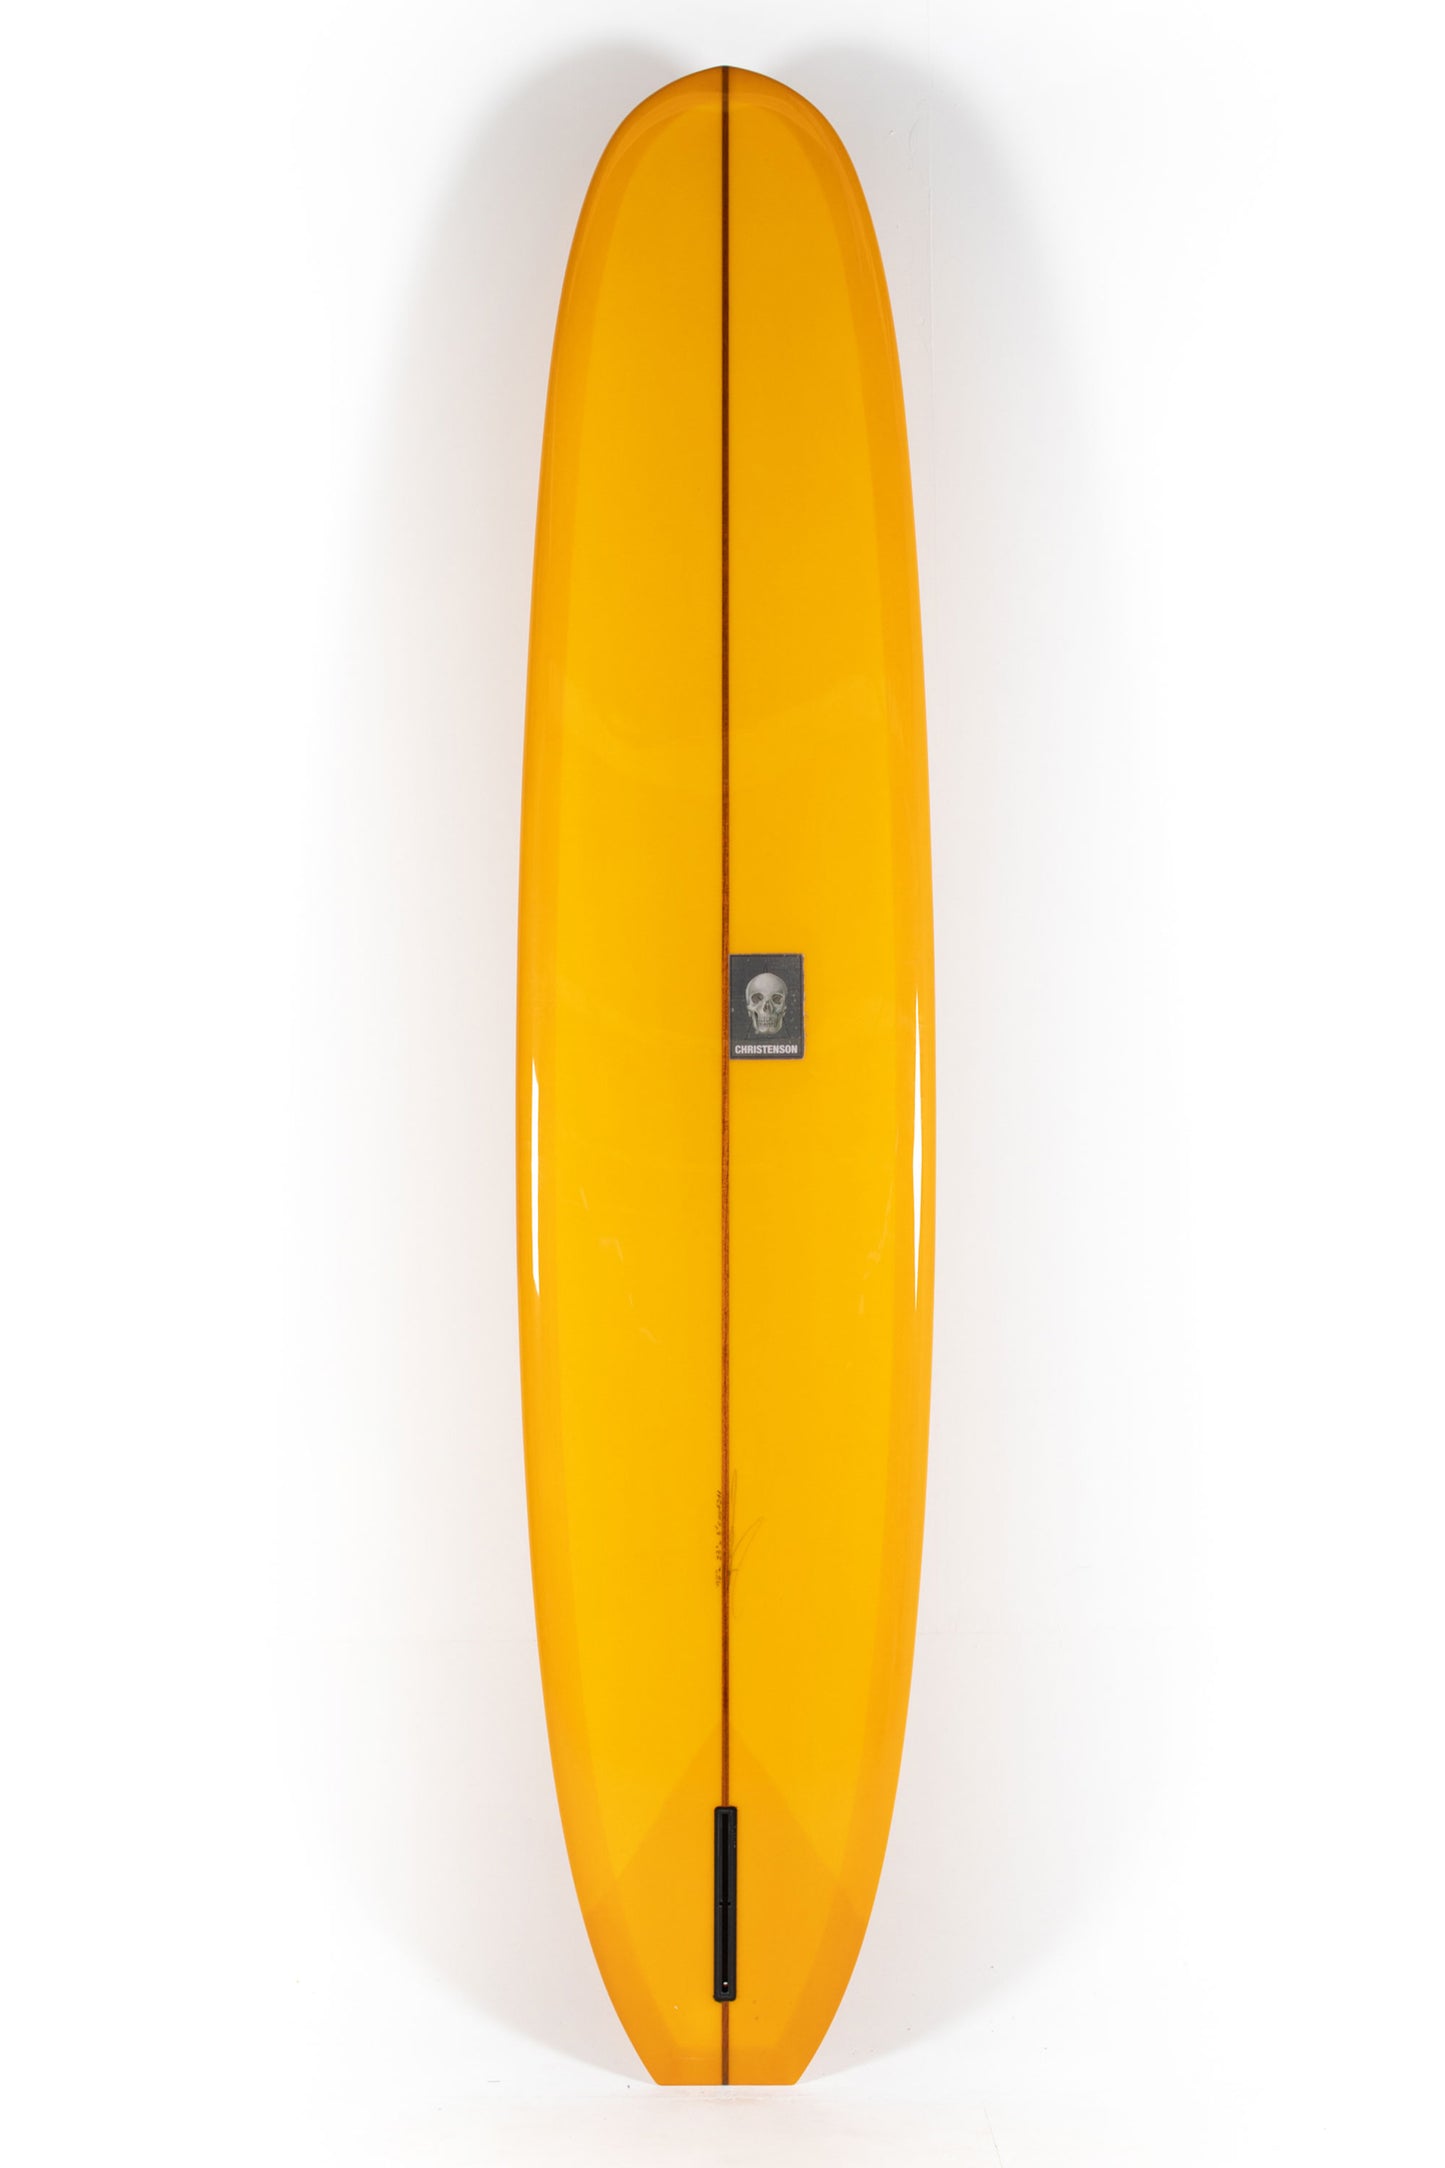 Pukas Surf Shop - Christenson Surfboard  - DEAD SLED by Chris Christenson - 9'6” x 23 x 3 - CX04241